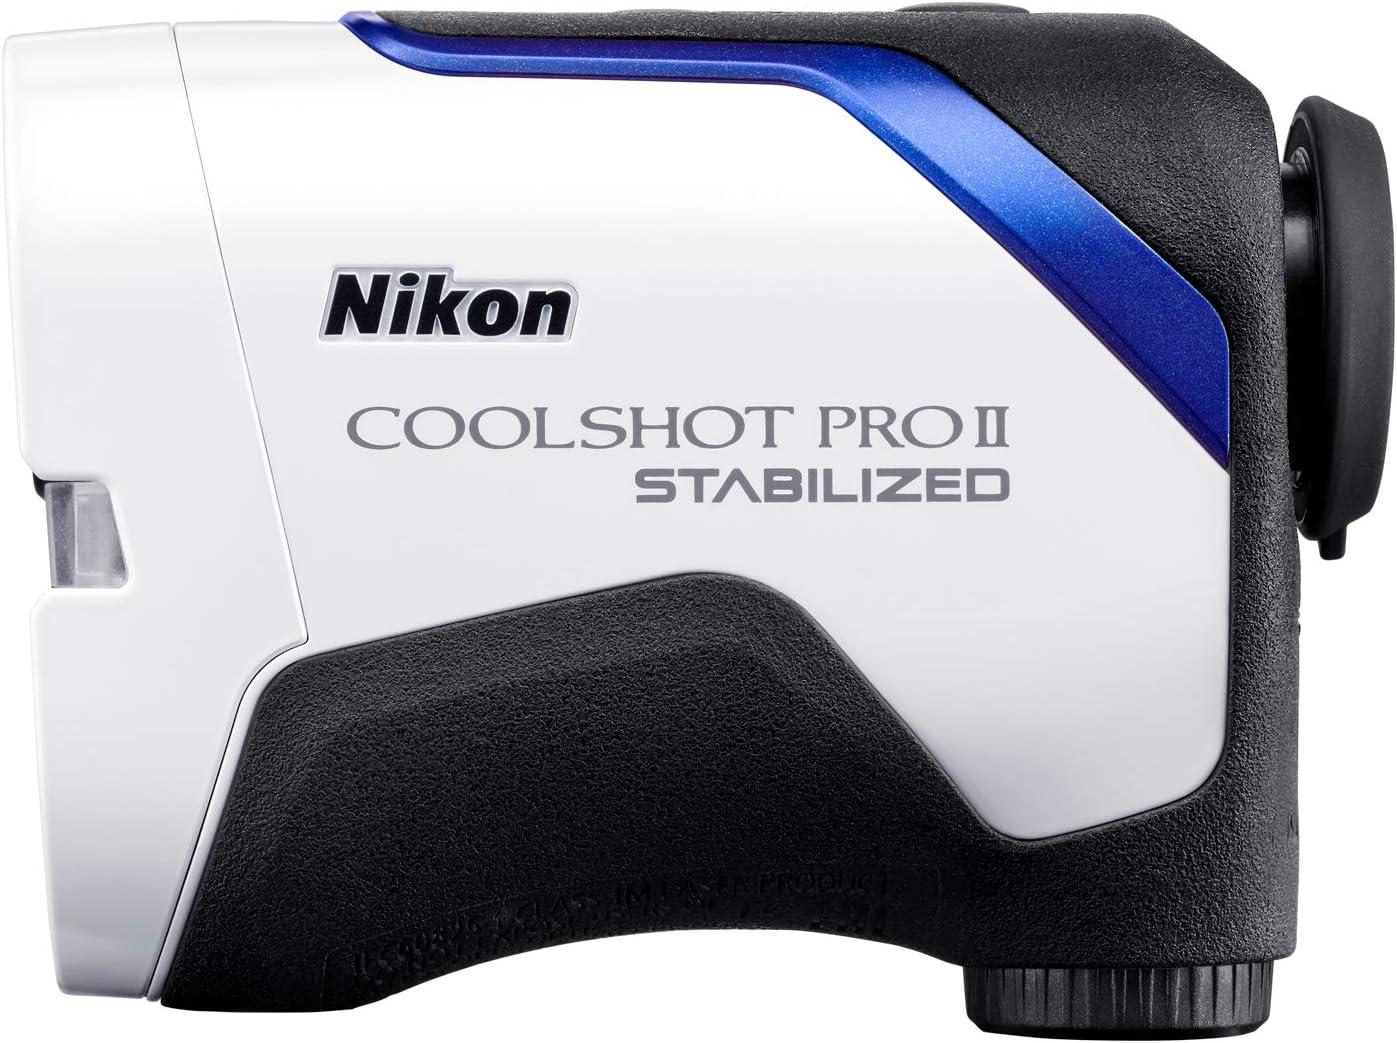 Nikon COOLSHOT PROII STABILIZED, White, Blue, Black